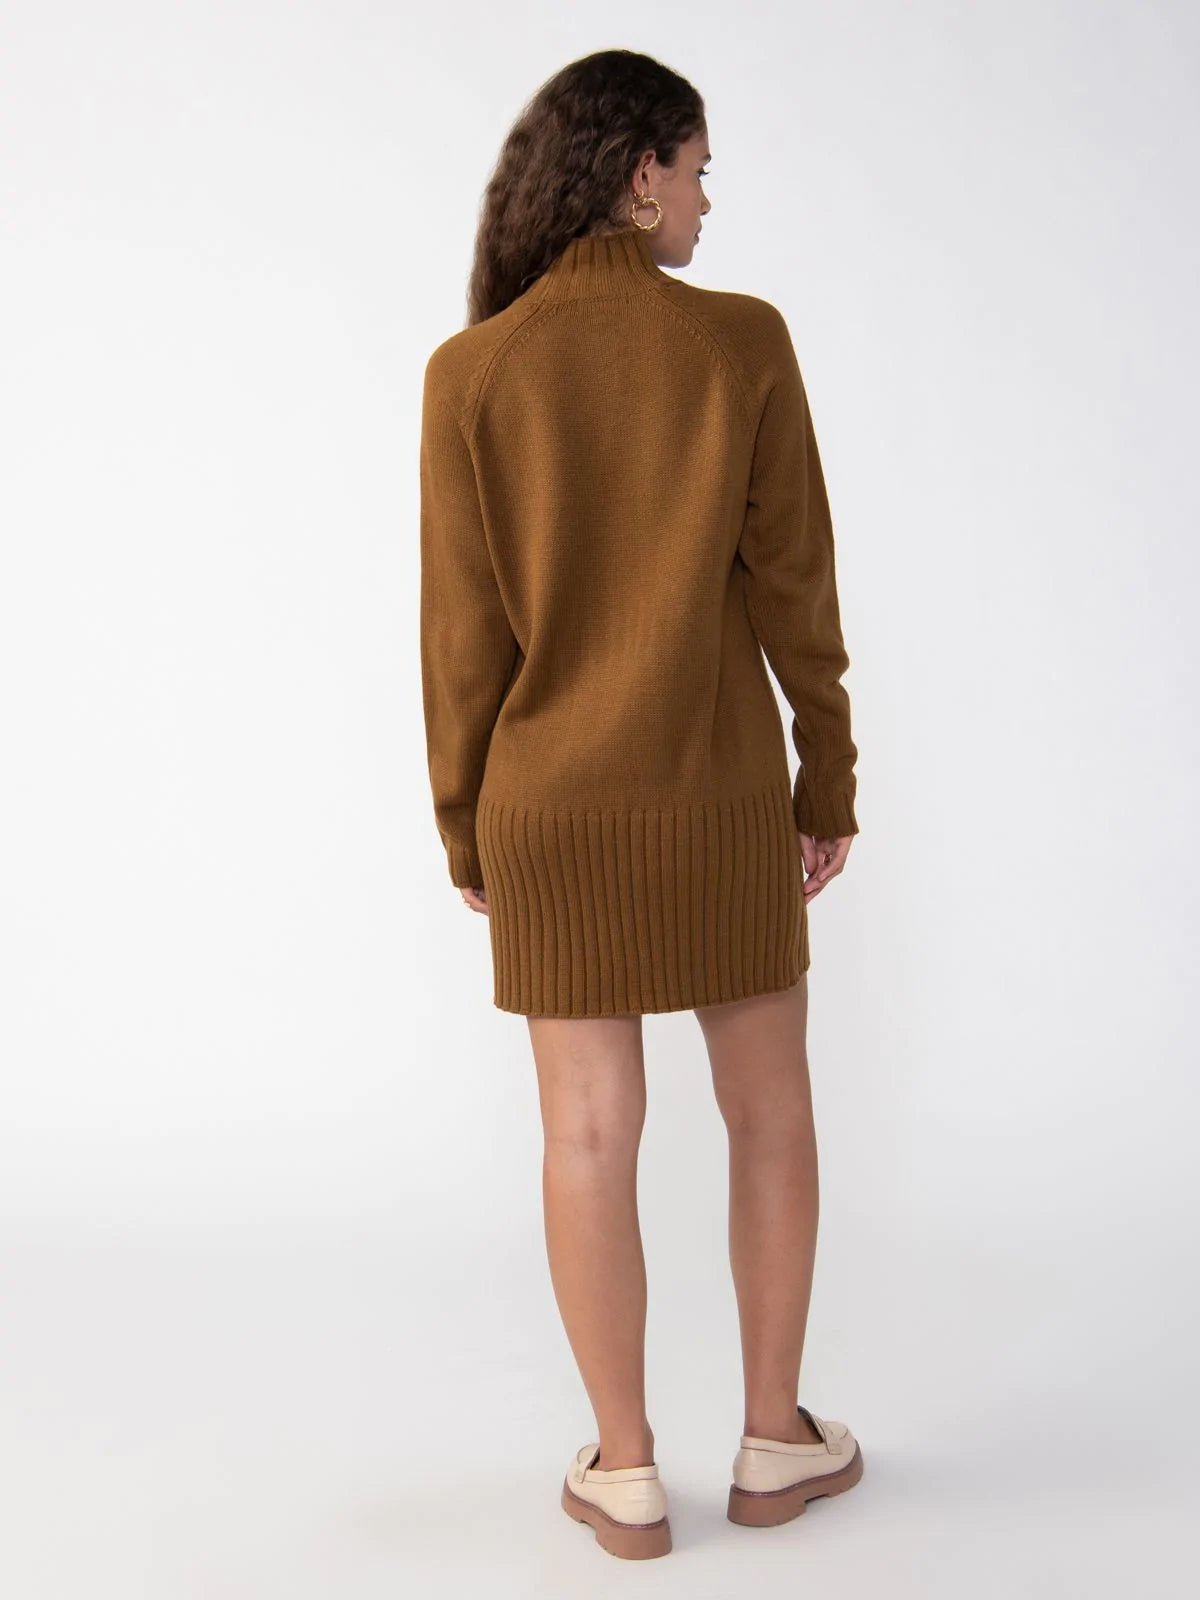 The Sweater Mini - The Posh Loft